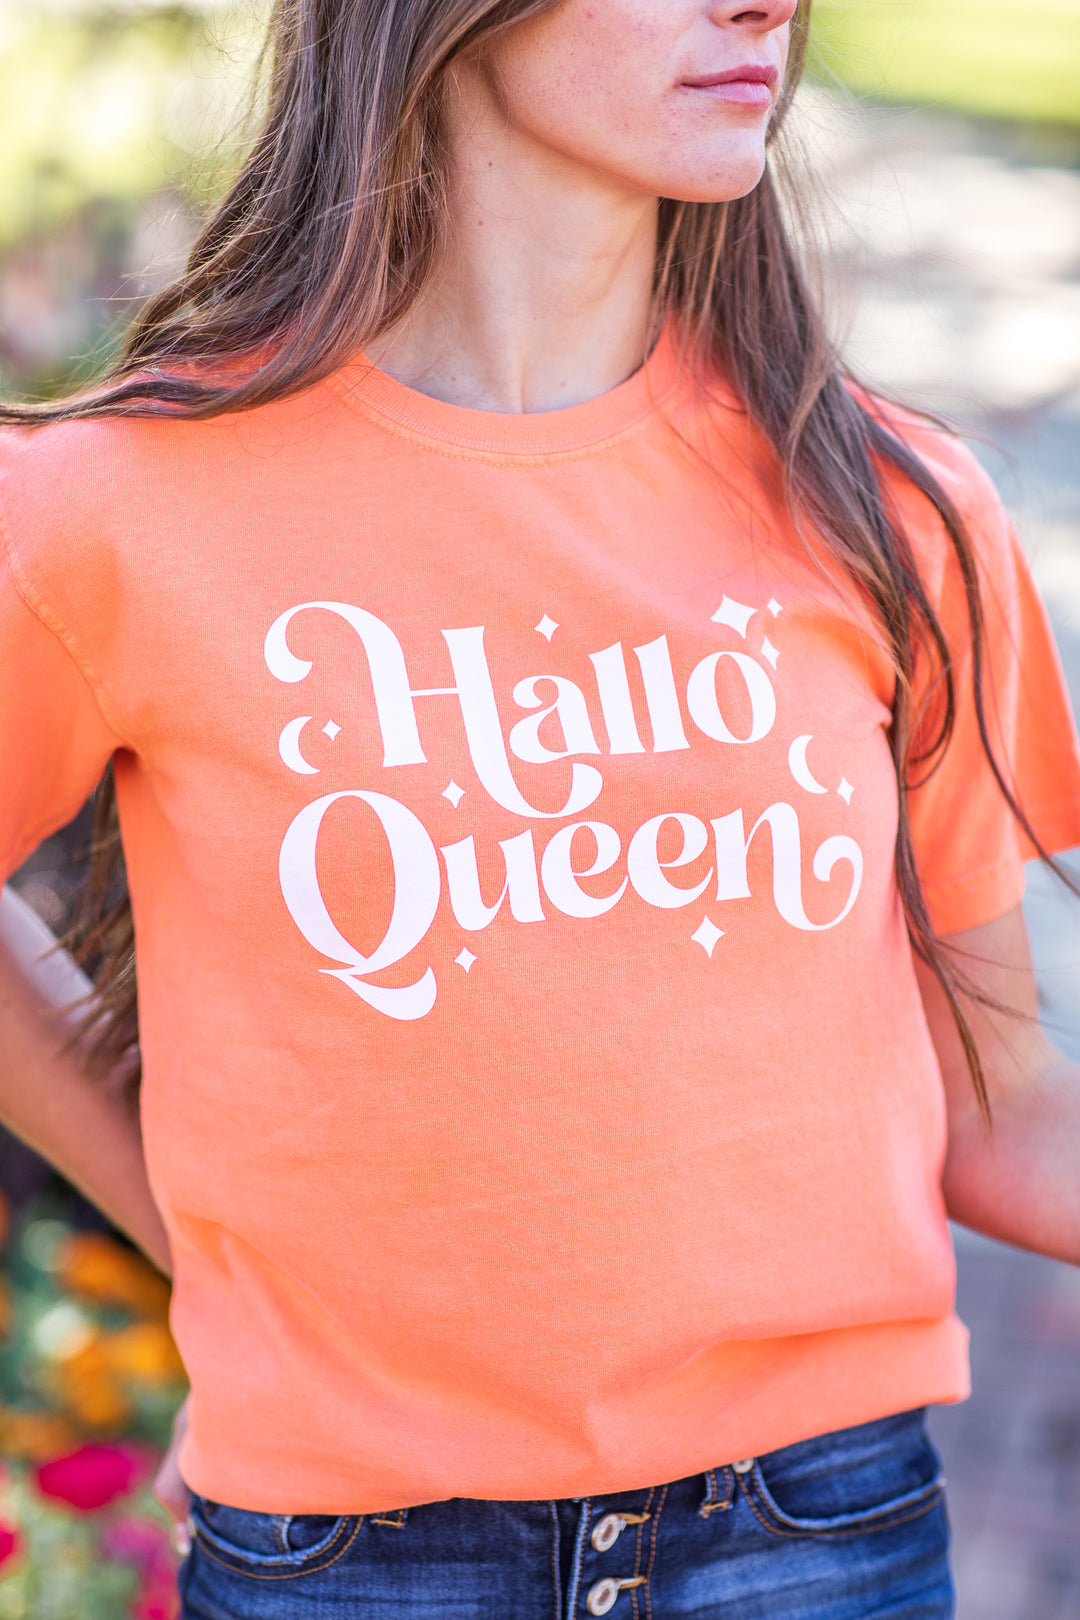 "Hallo-Queen" Graphic Tee